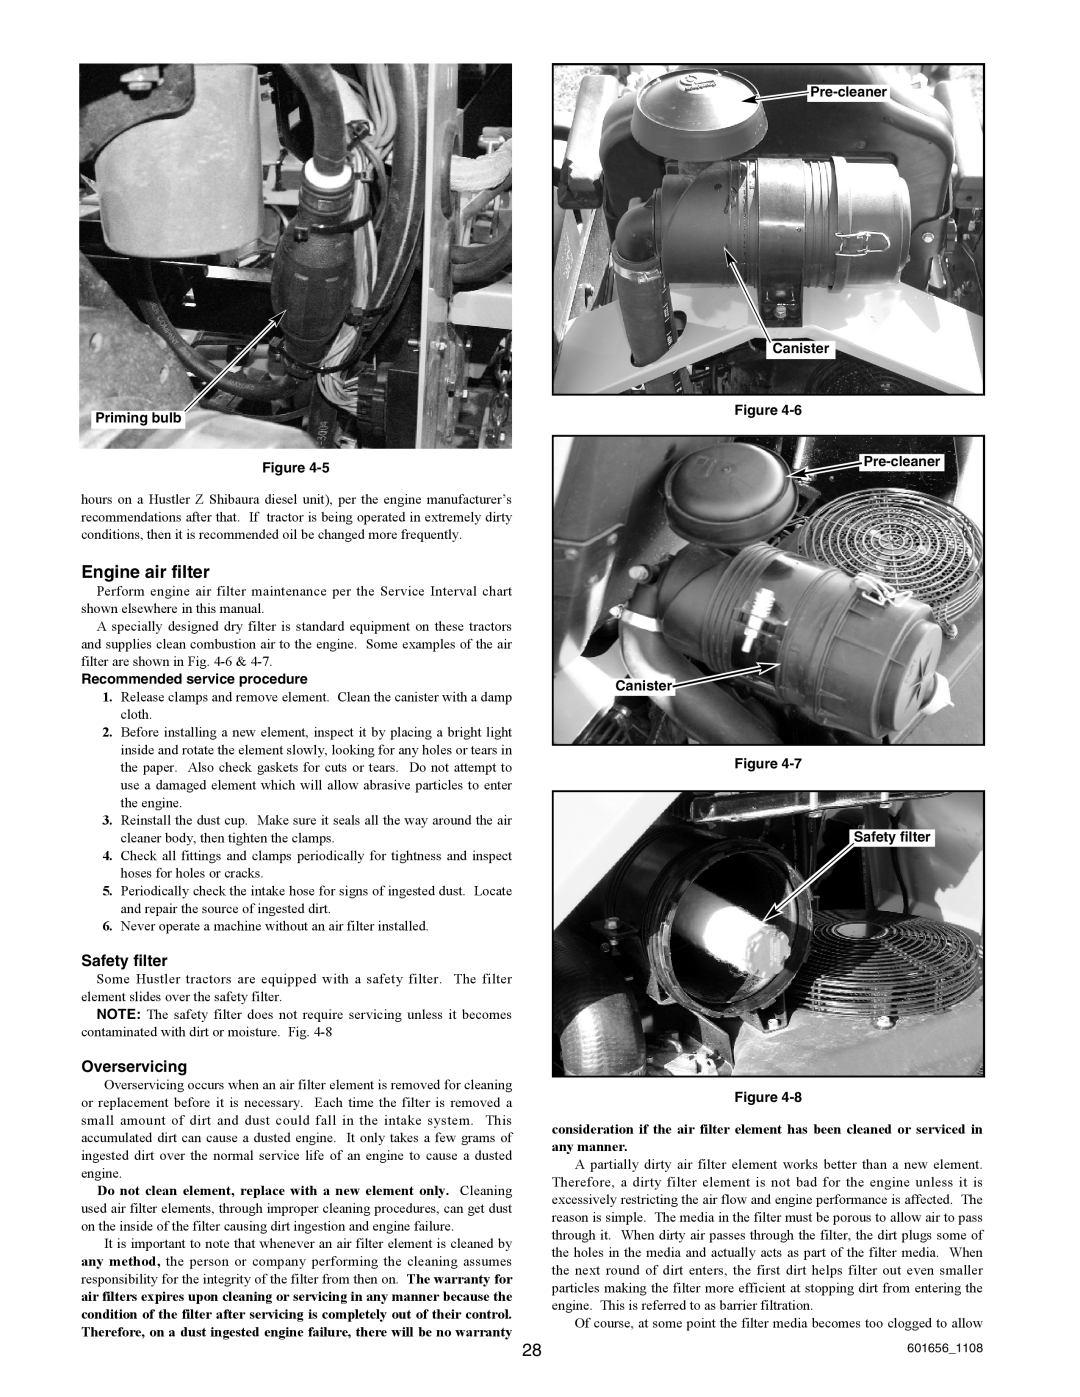 Hustler Turf 927814, 927566 Engine air filter, Safety filter, Overservicing, Priming bulb, Recommended service procedure 